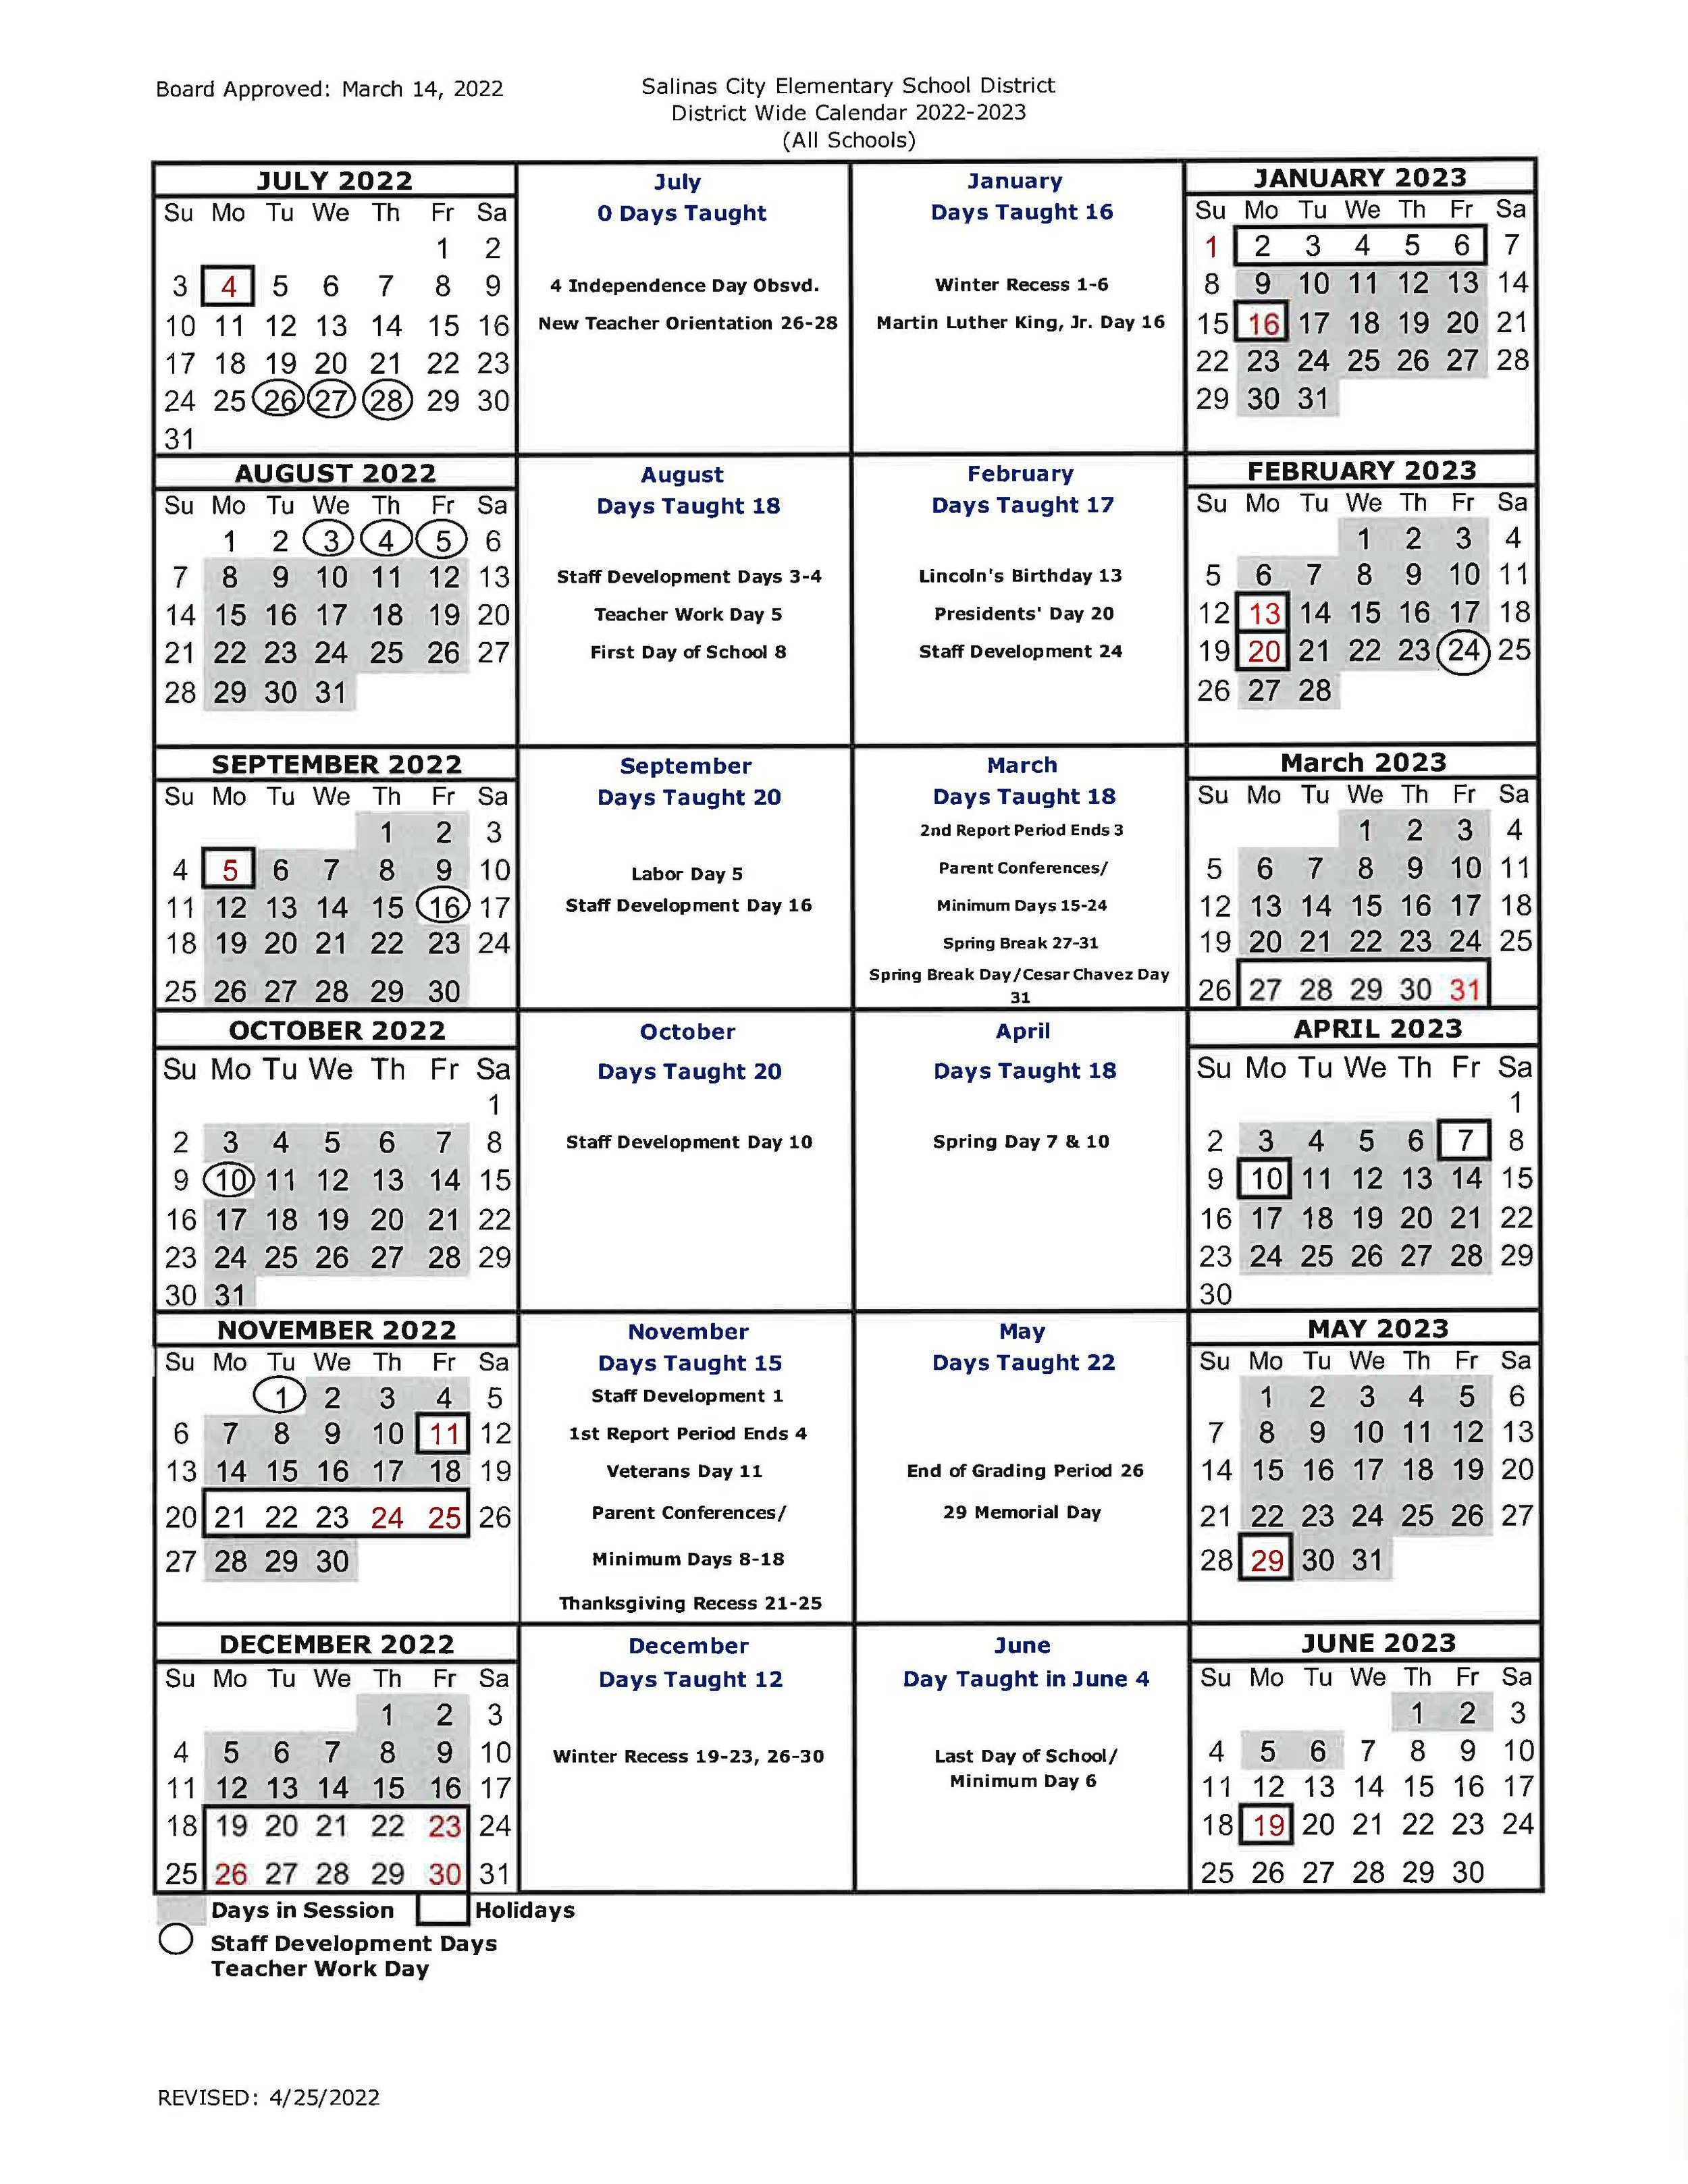 salinas-city-elementary-school-district-calendar-2023-2024